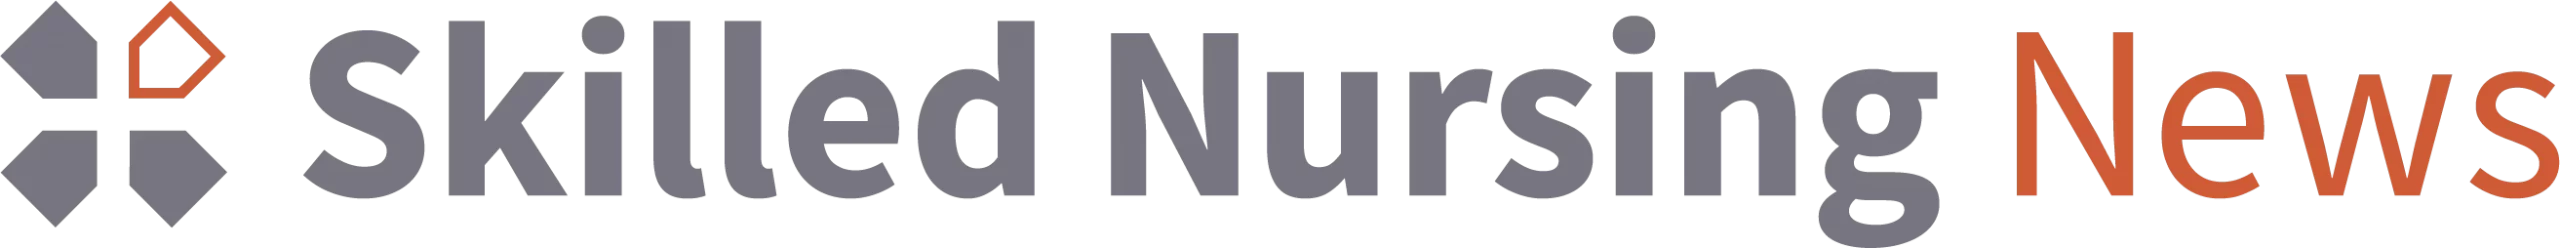 skilled nursing news logo